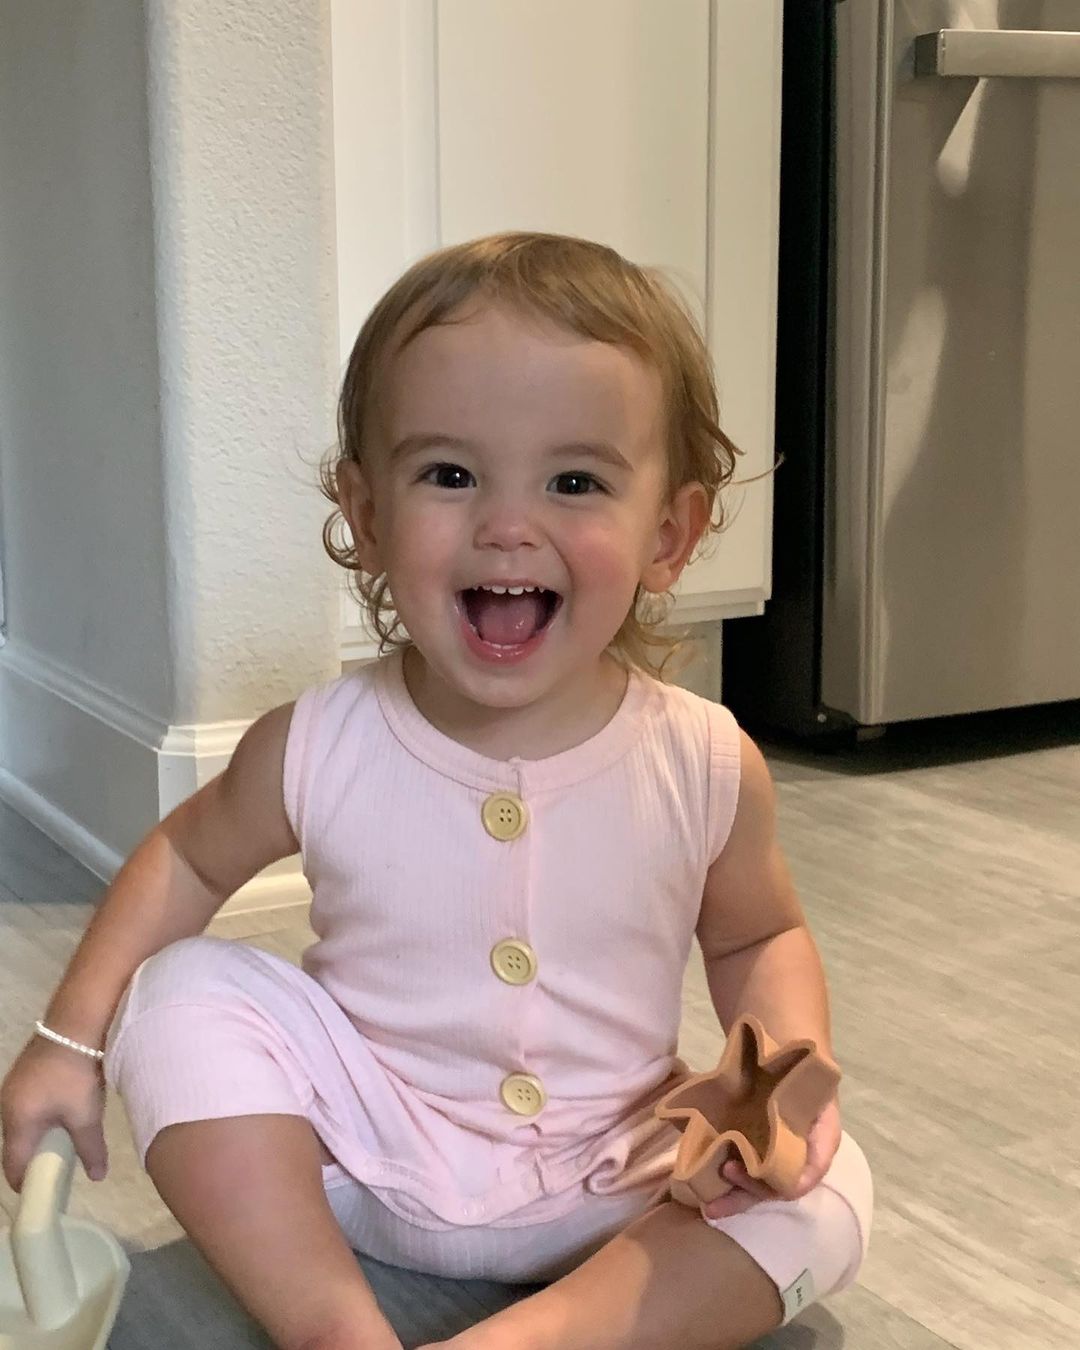 Lala Kent Gave 1-Year-Old Daughter A Louis Vuitton Bag